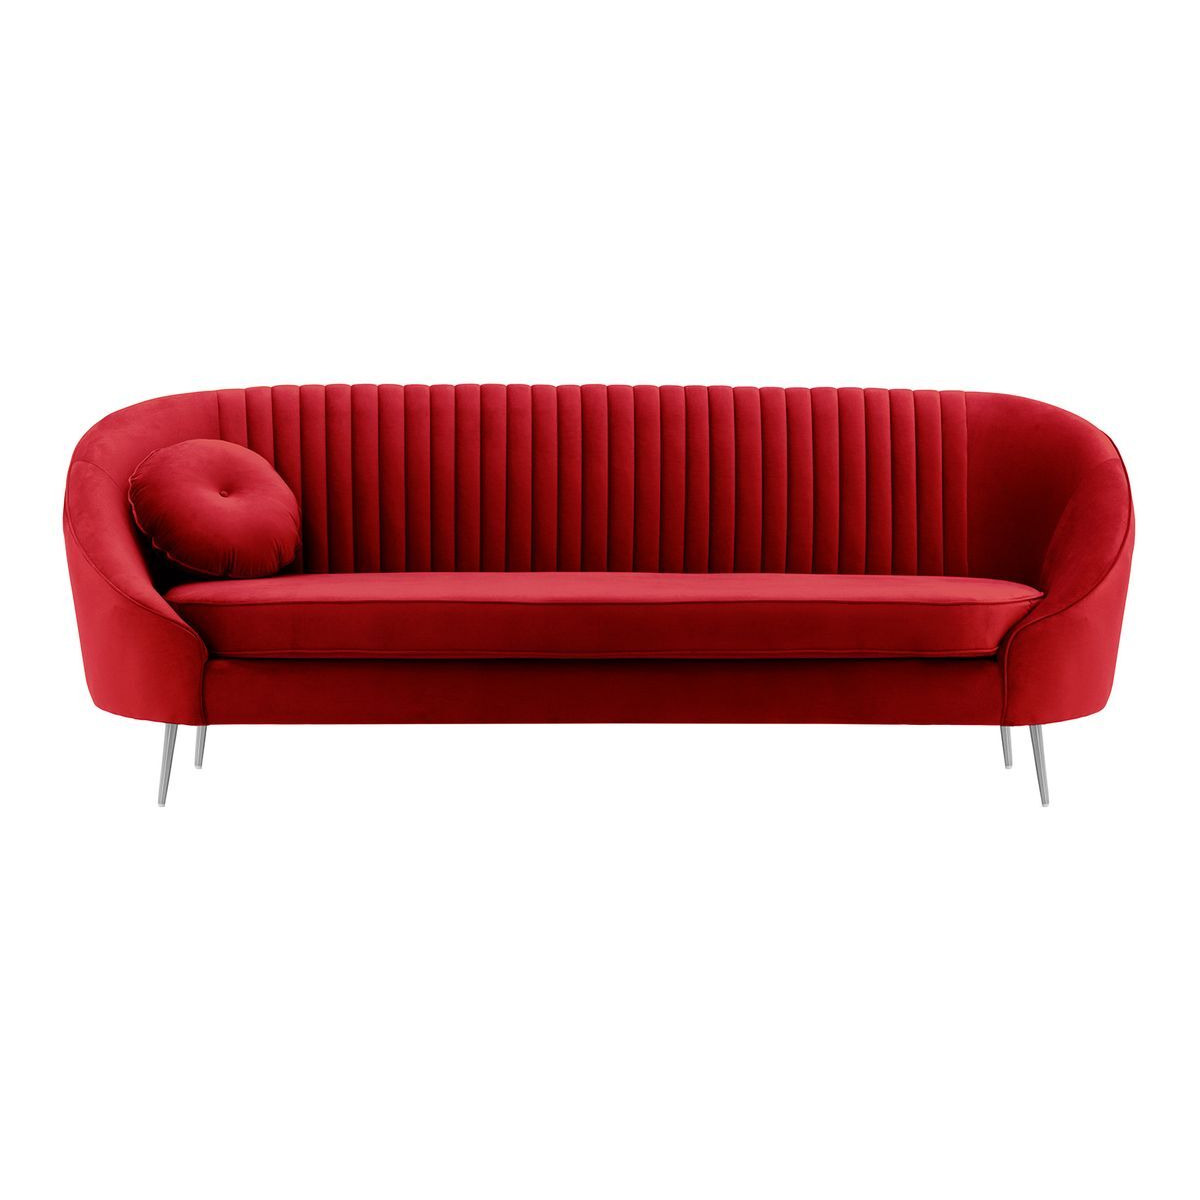 Kooper 3 Seater Sofa with stitching, dark red, Leg colour: chrome metal - image 1